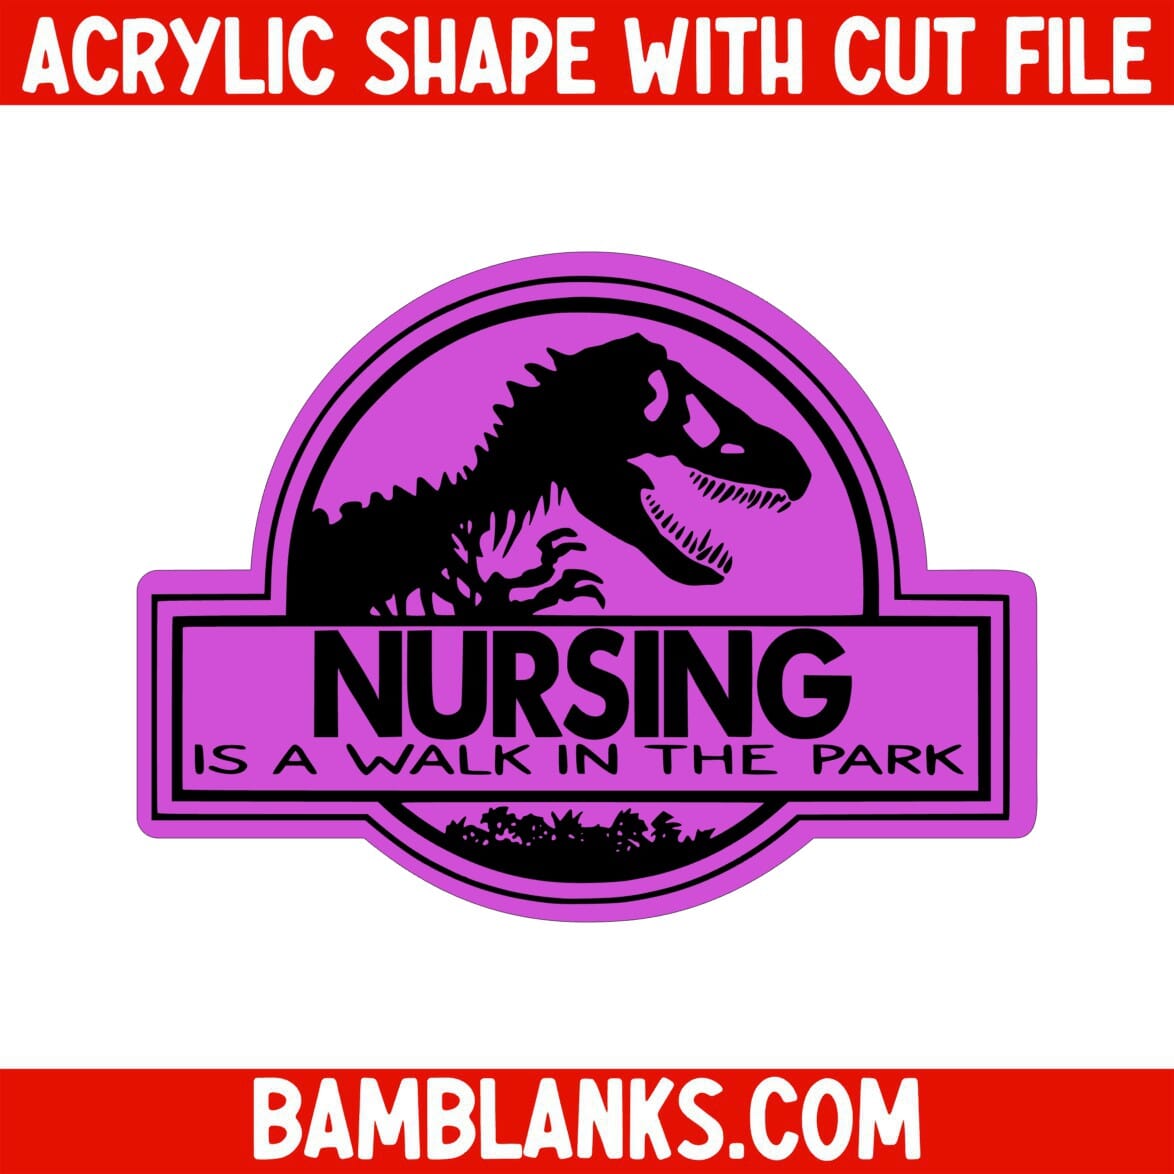 Walk In The Park Nursing - Acrylic Shape #232